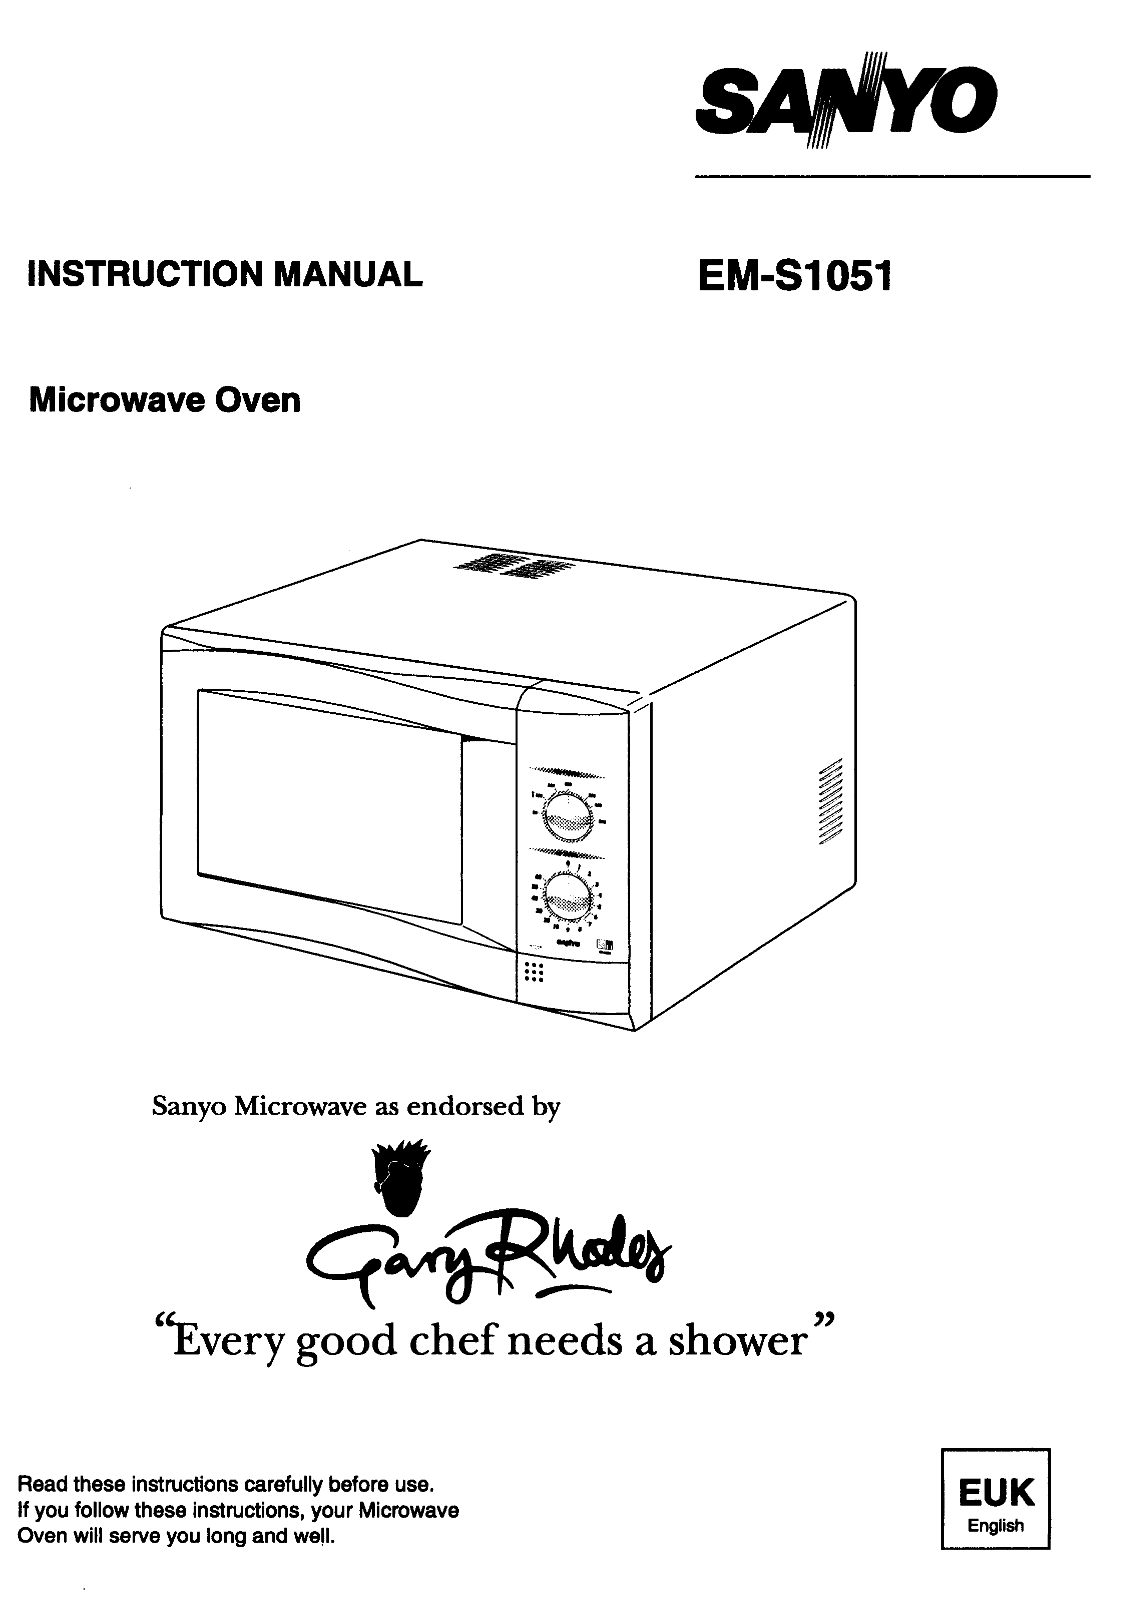 Sanyo EM-S1051 Instruction Manual